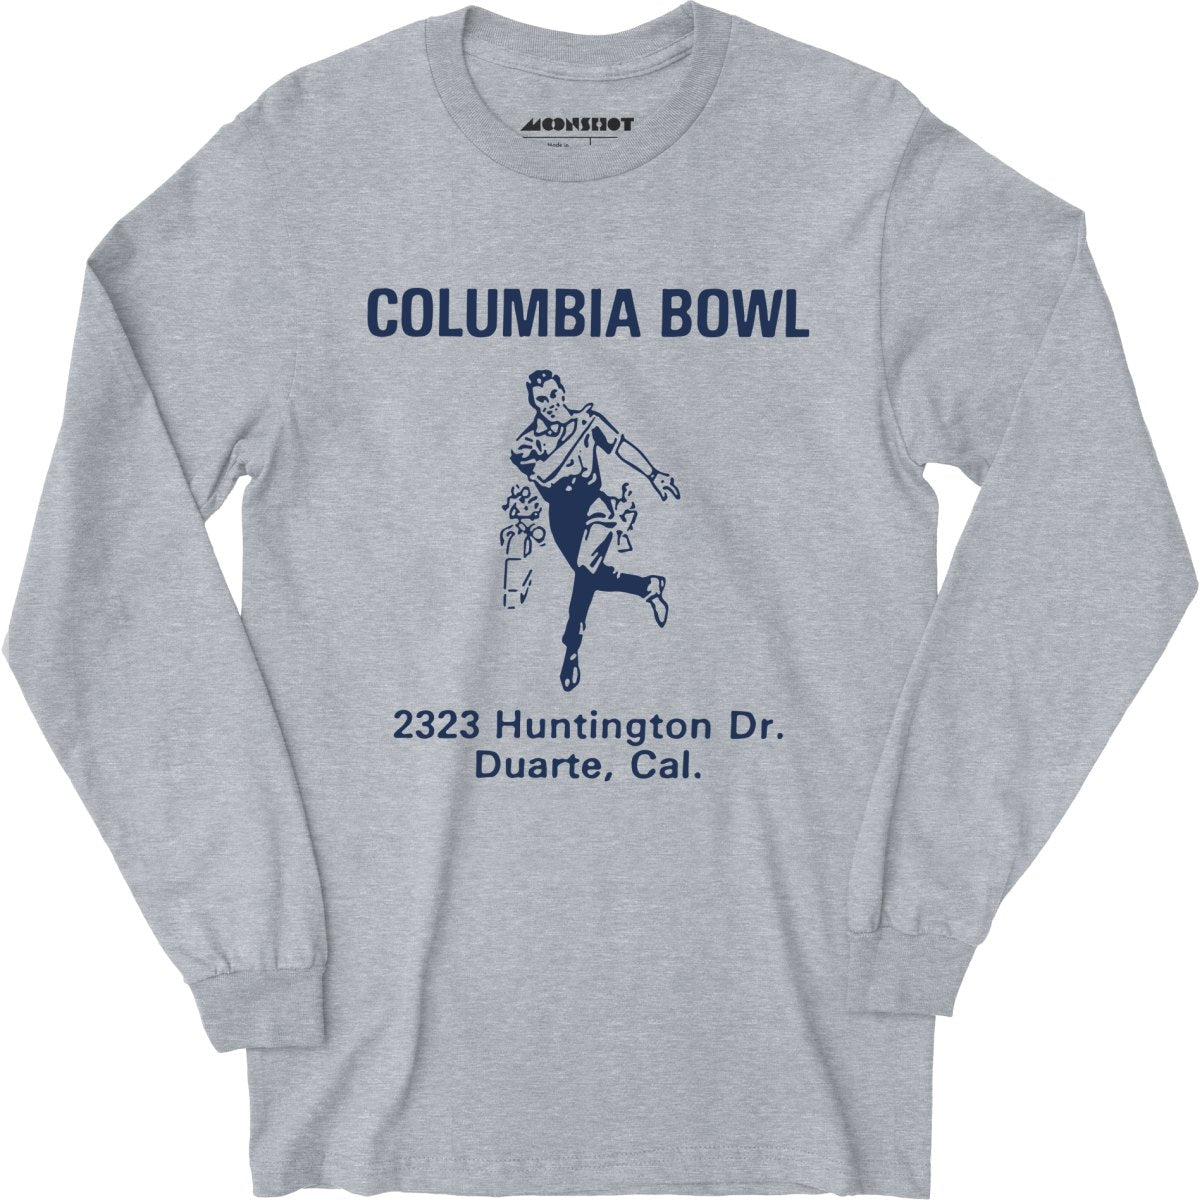 Columbia Bowl - Duarte, CA - Vintage Bowling Alley - Long Sleeve T-Shirt